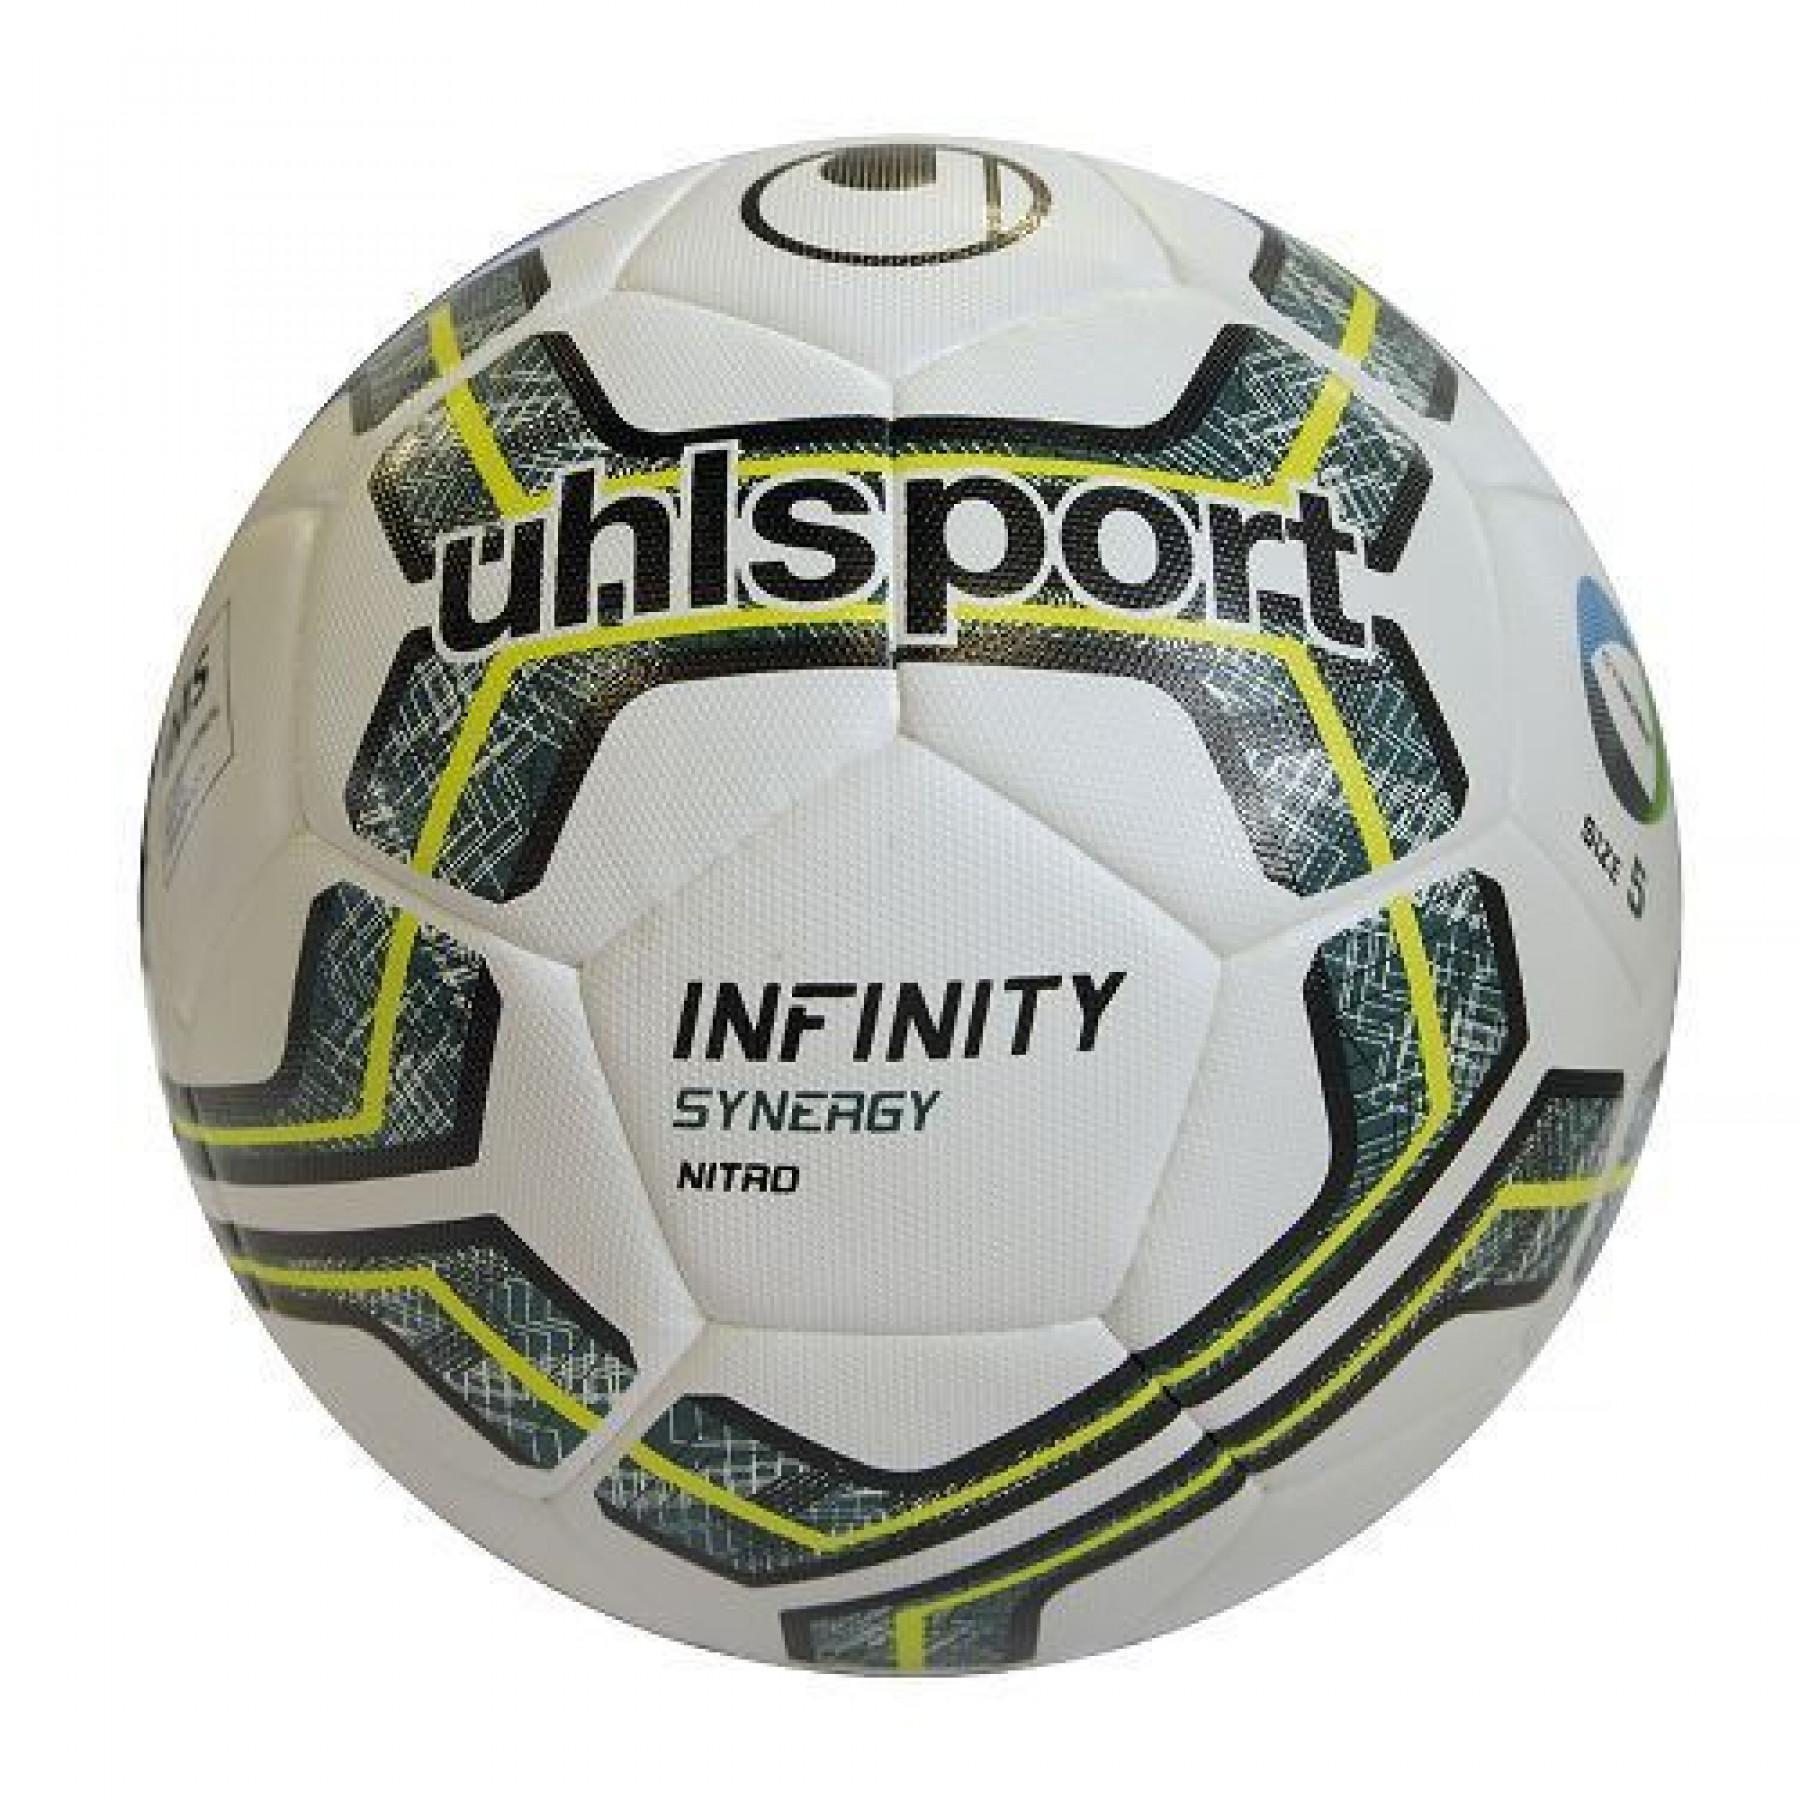 Förpackning med 10 ballonger Uhlsport Infinity synergy Nitro 2.0